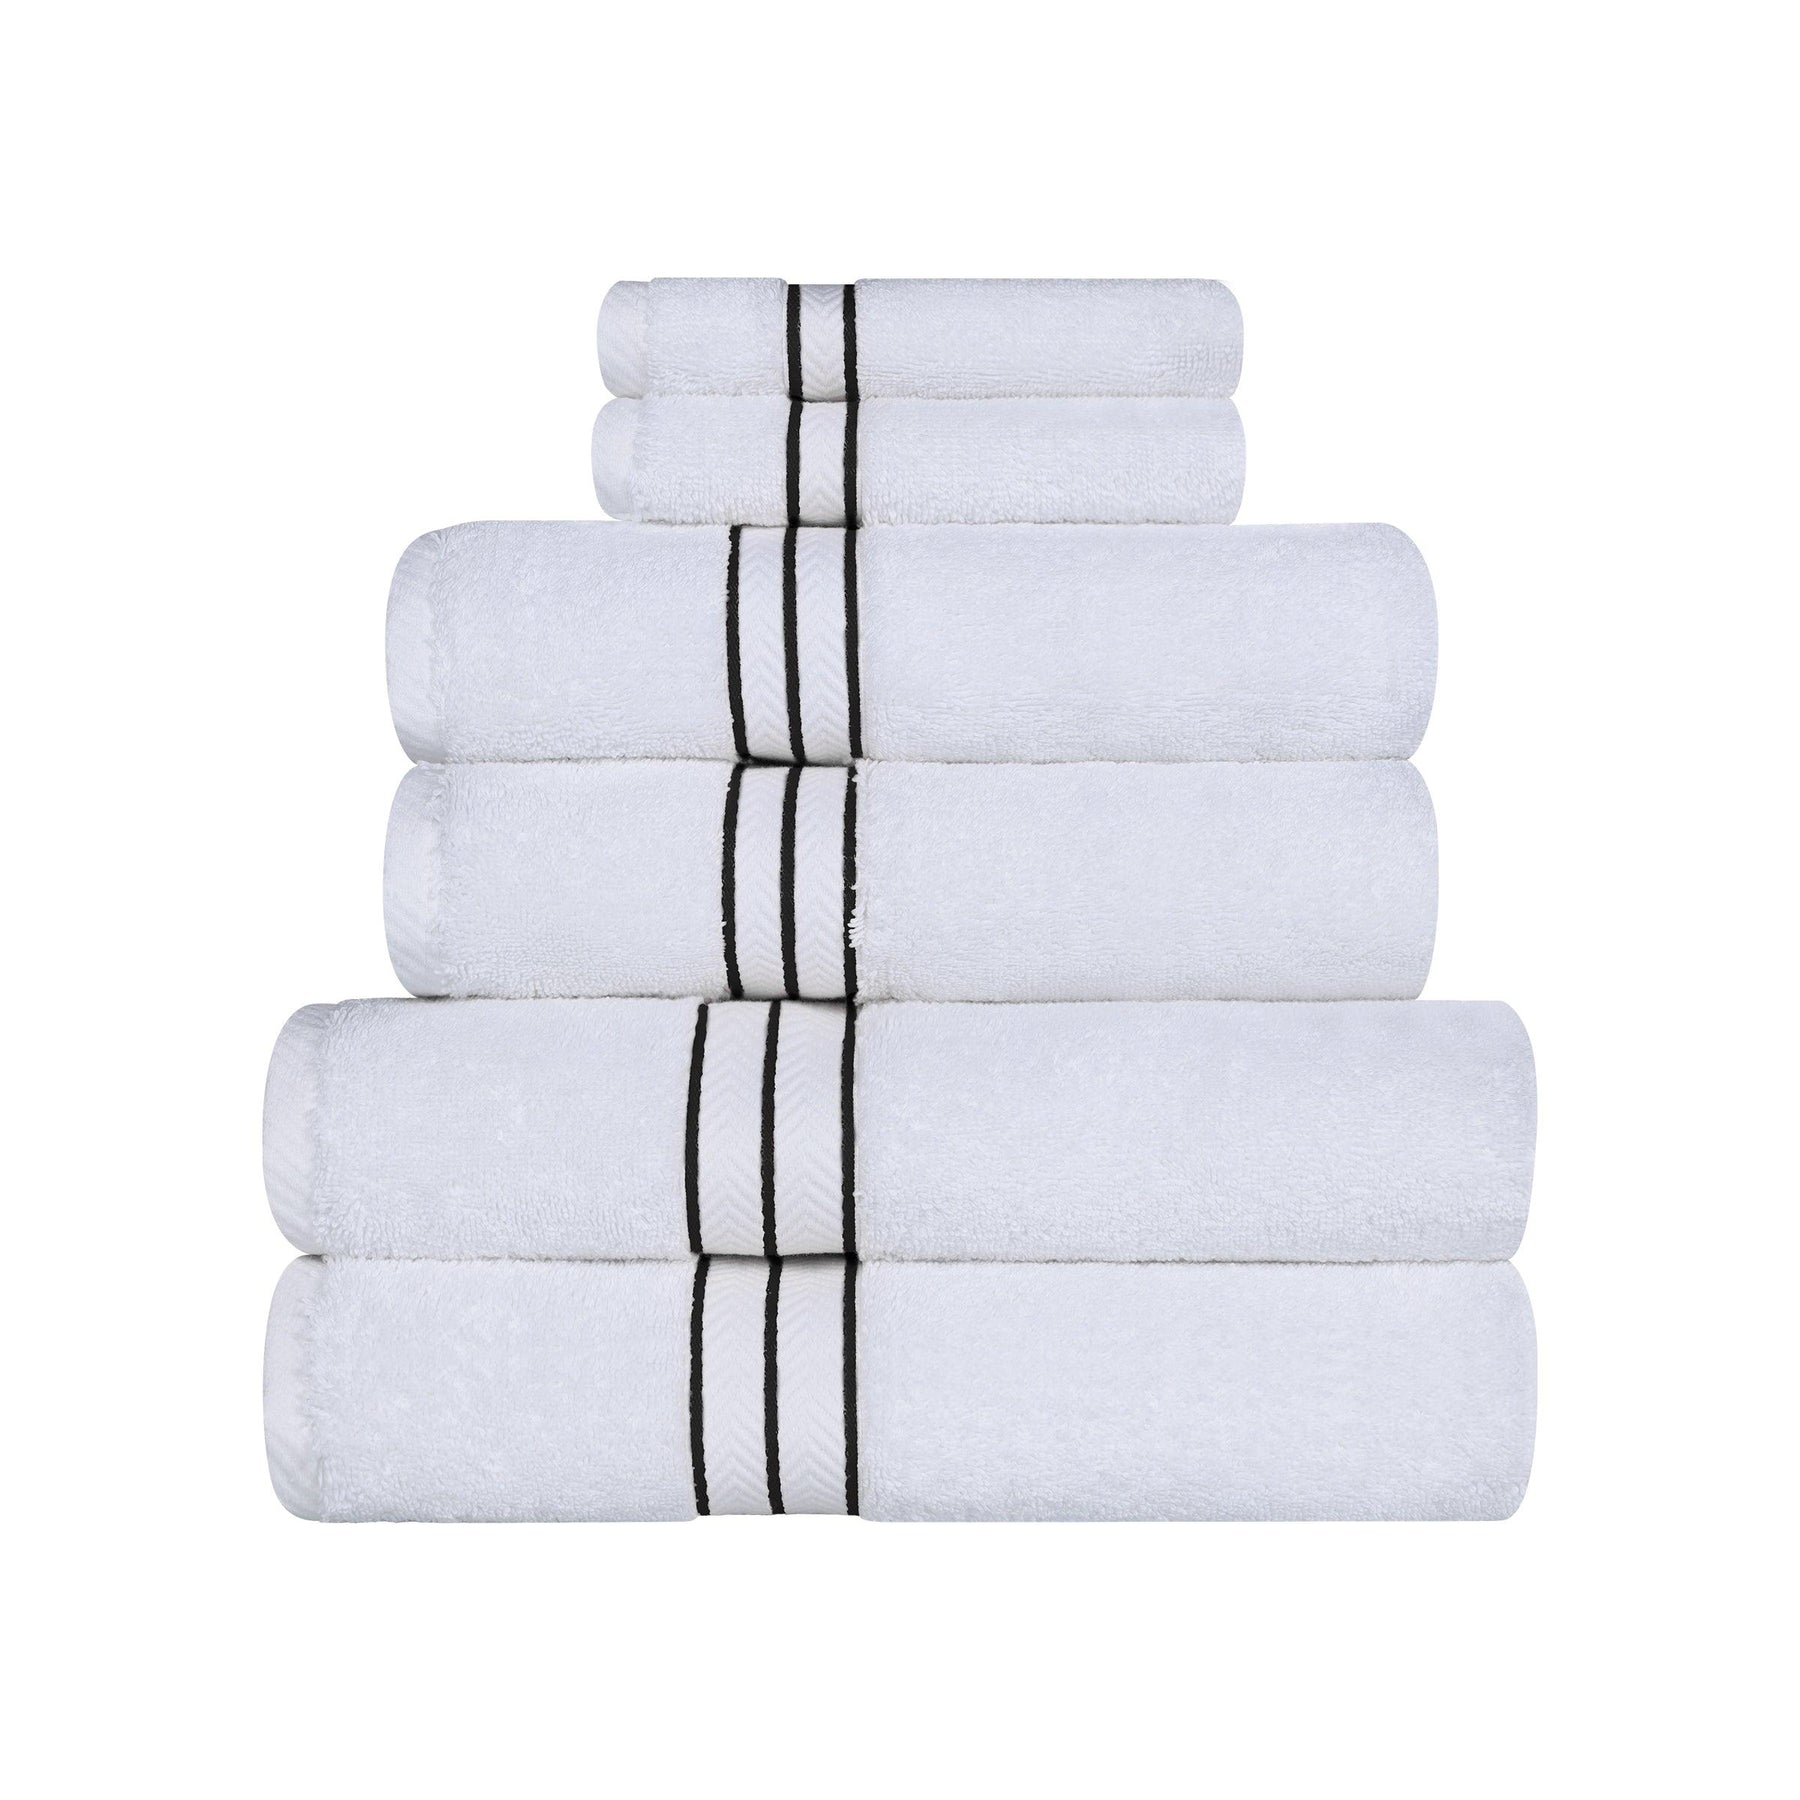 Turkish Cotton Heavyweight Ultra-Plush 6 Piece Bath Towel Set - white/black